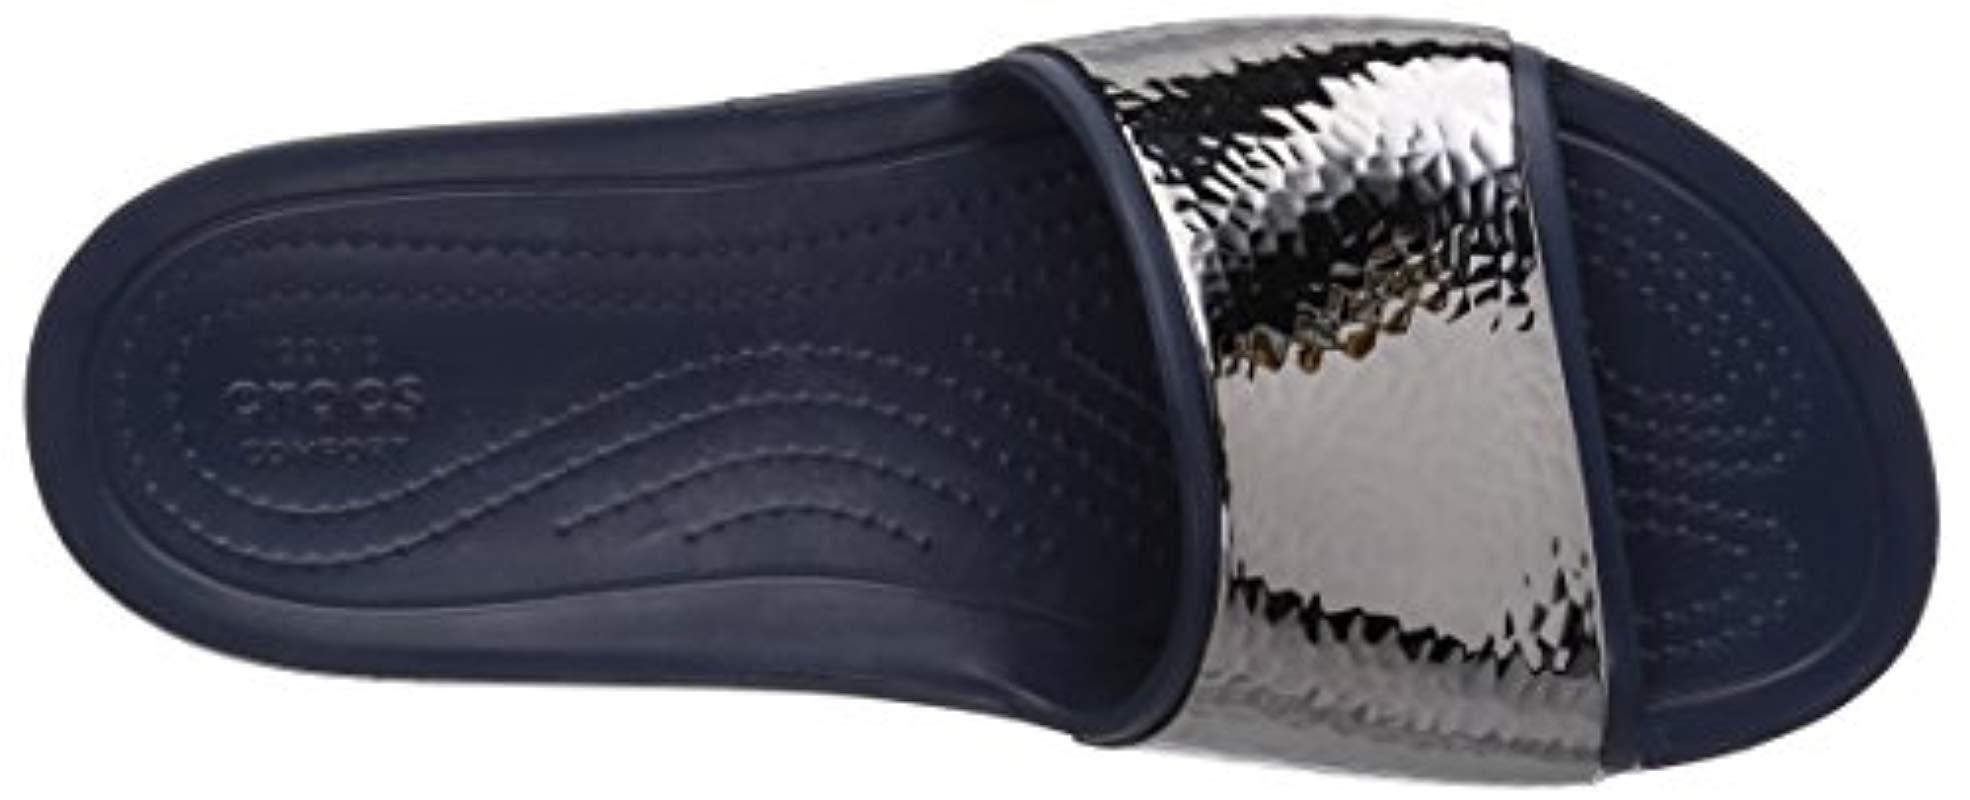 women's crocs sloane hammered metallic slide